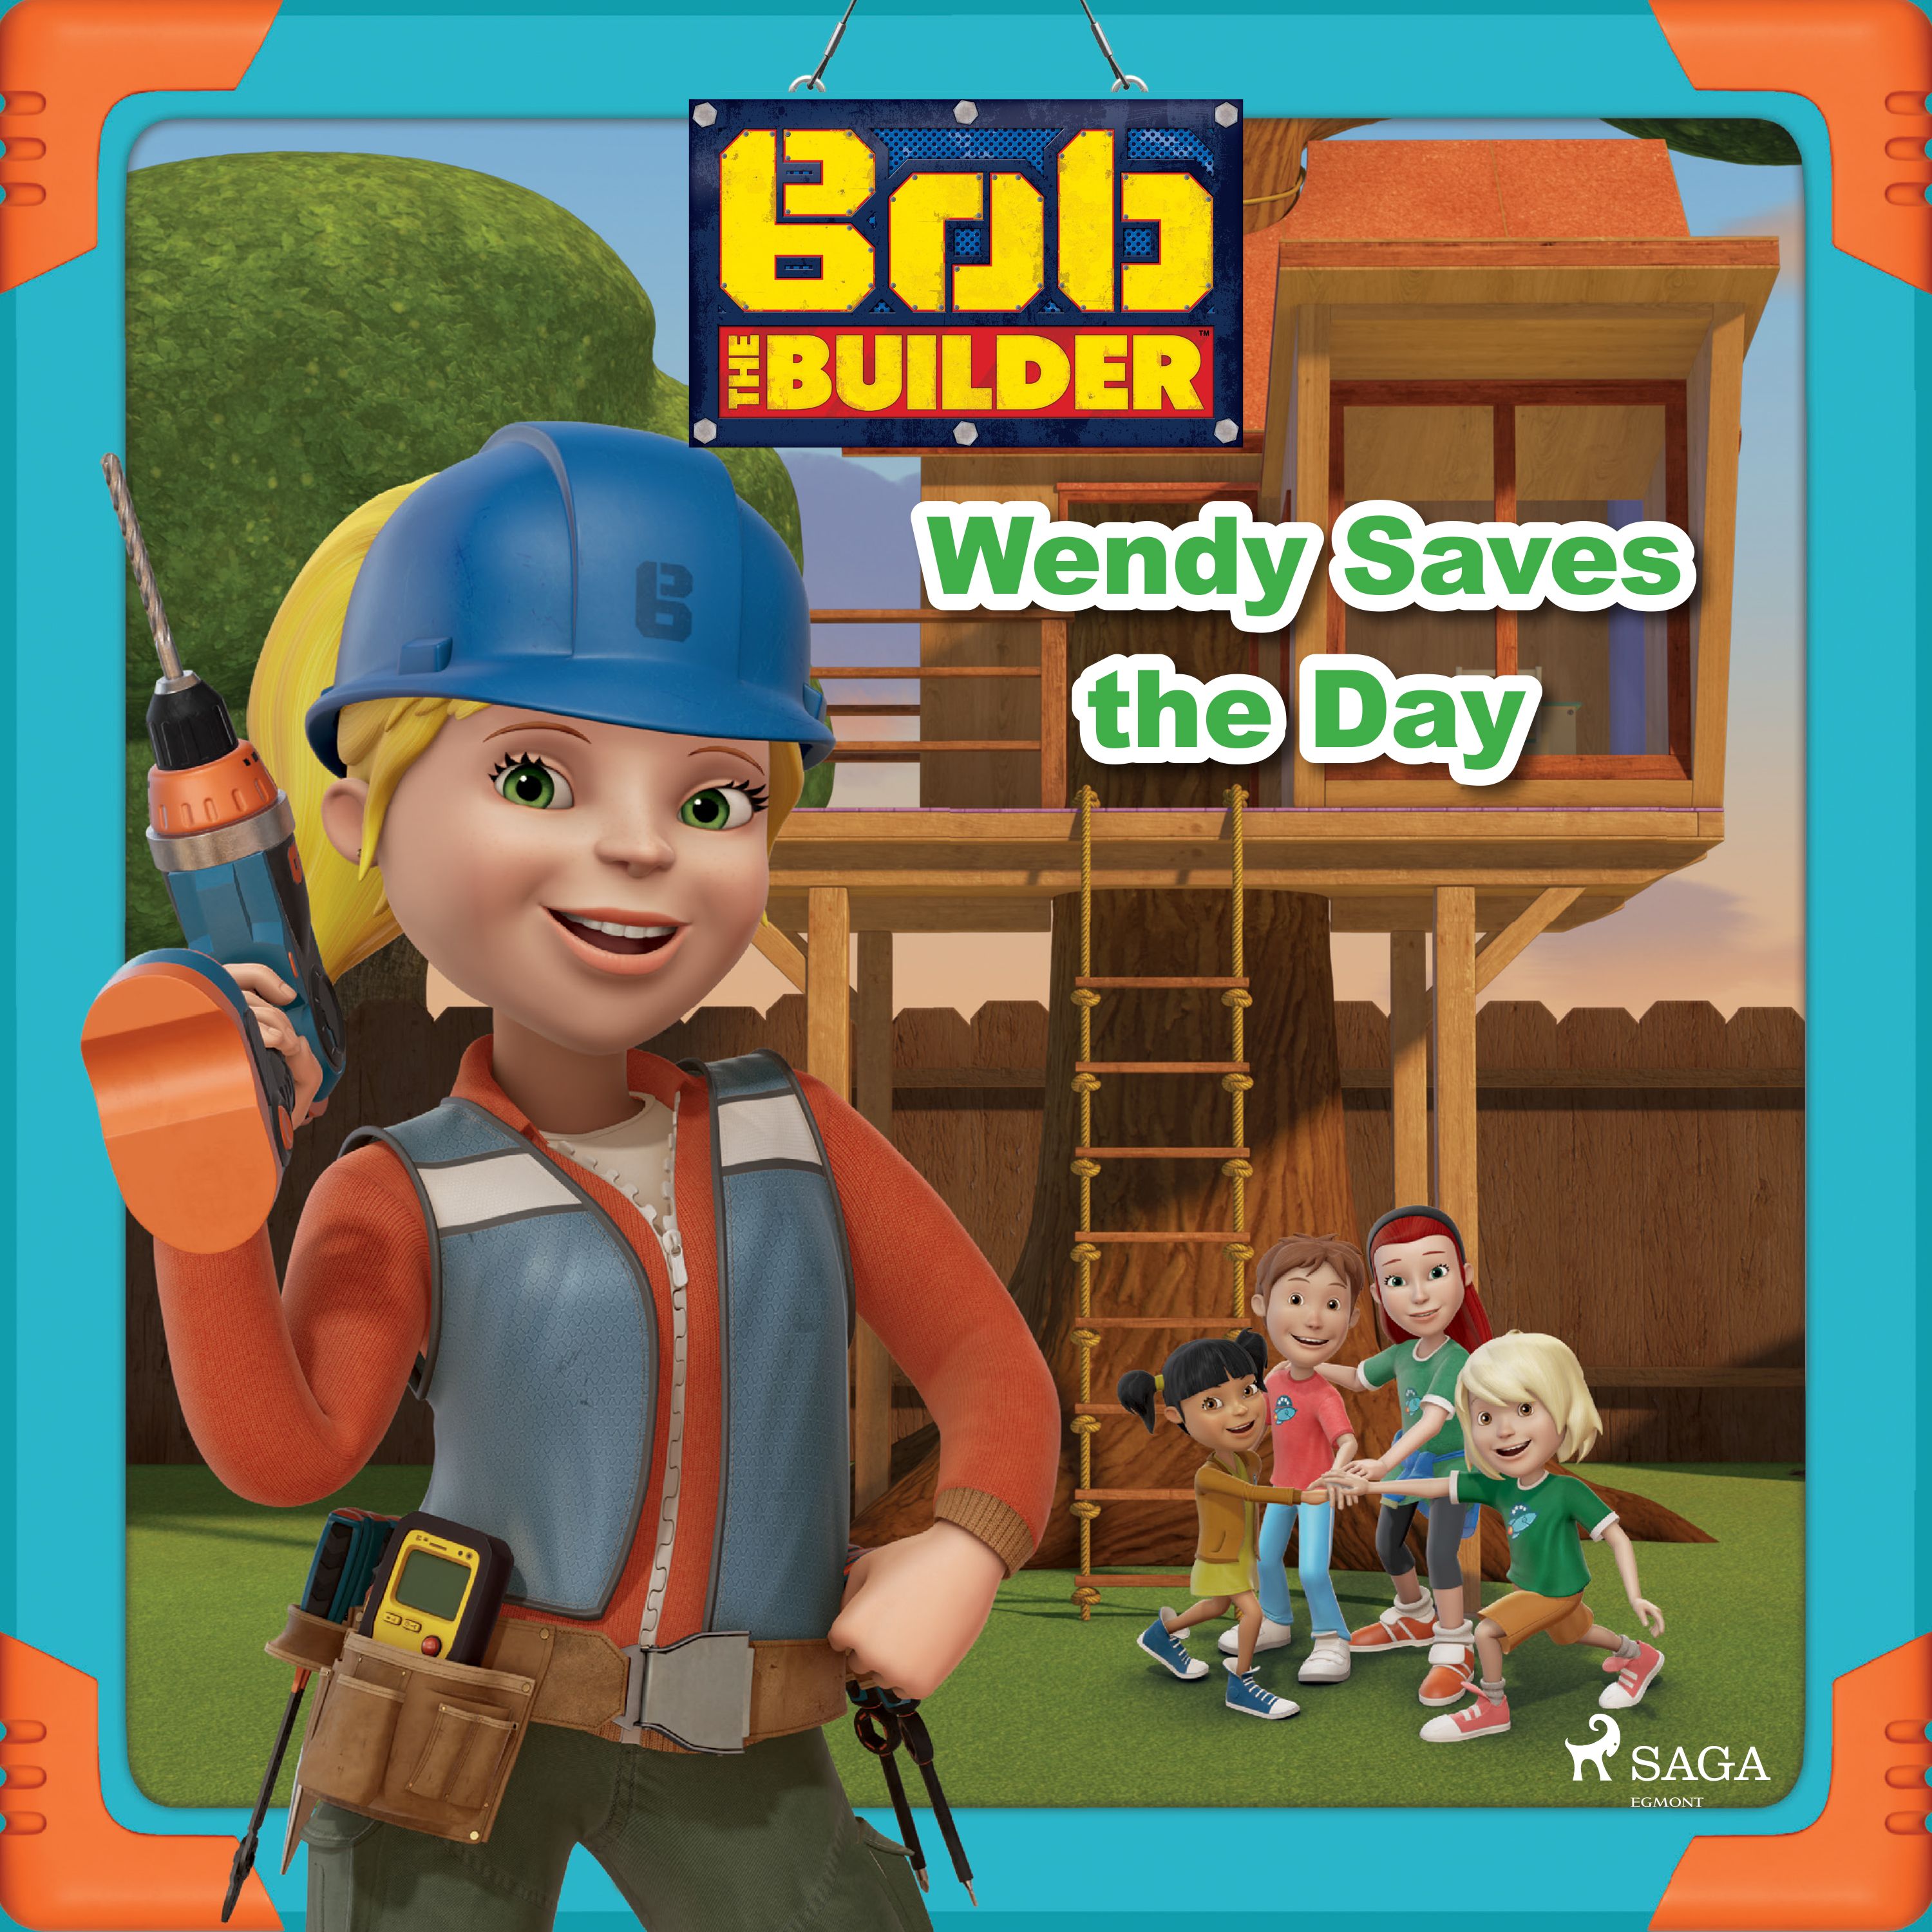 Bob the Builder: Wendy Saves the Day, ljudbok av Mattel